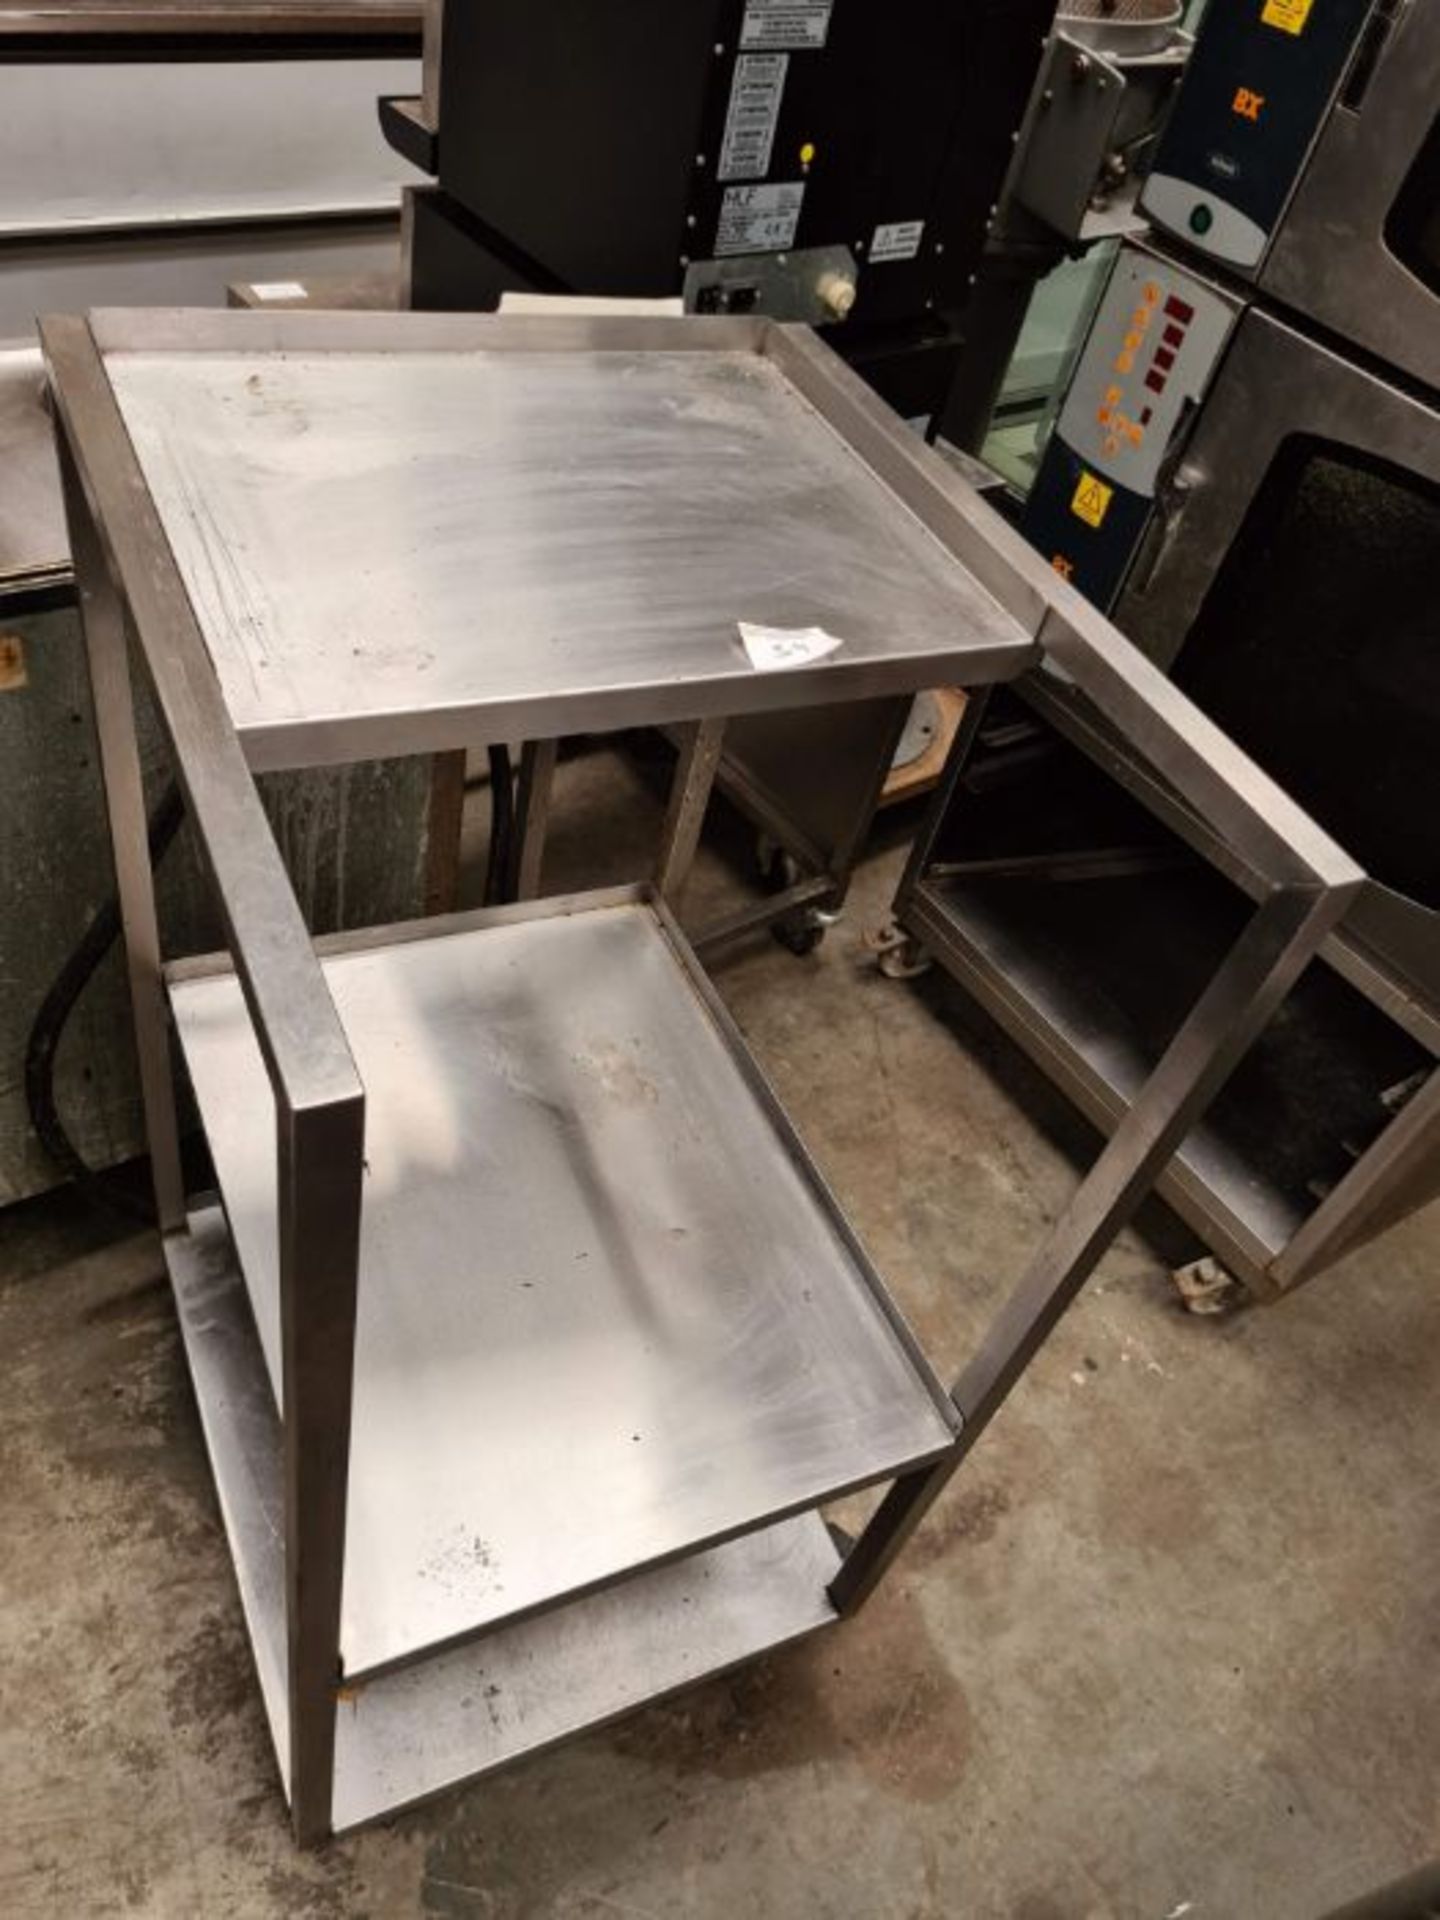 Stainless steel table, 3 shelves, on wheels.